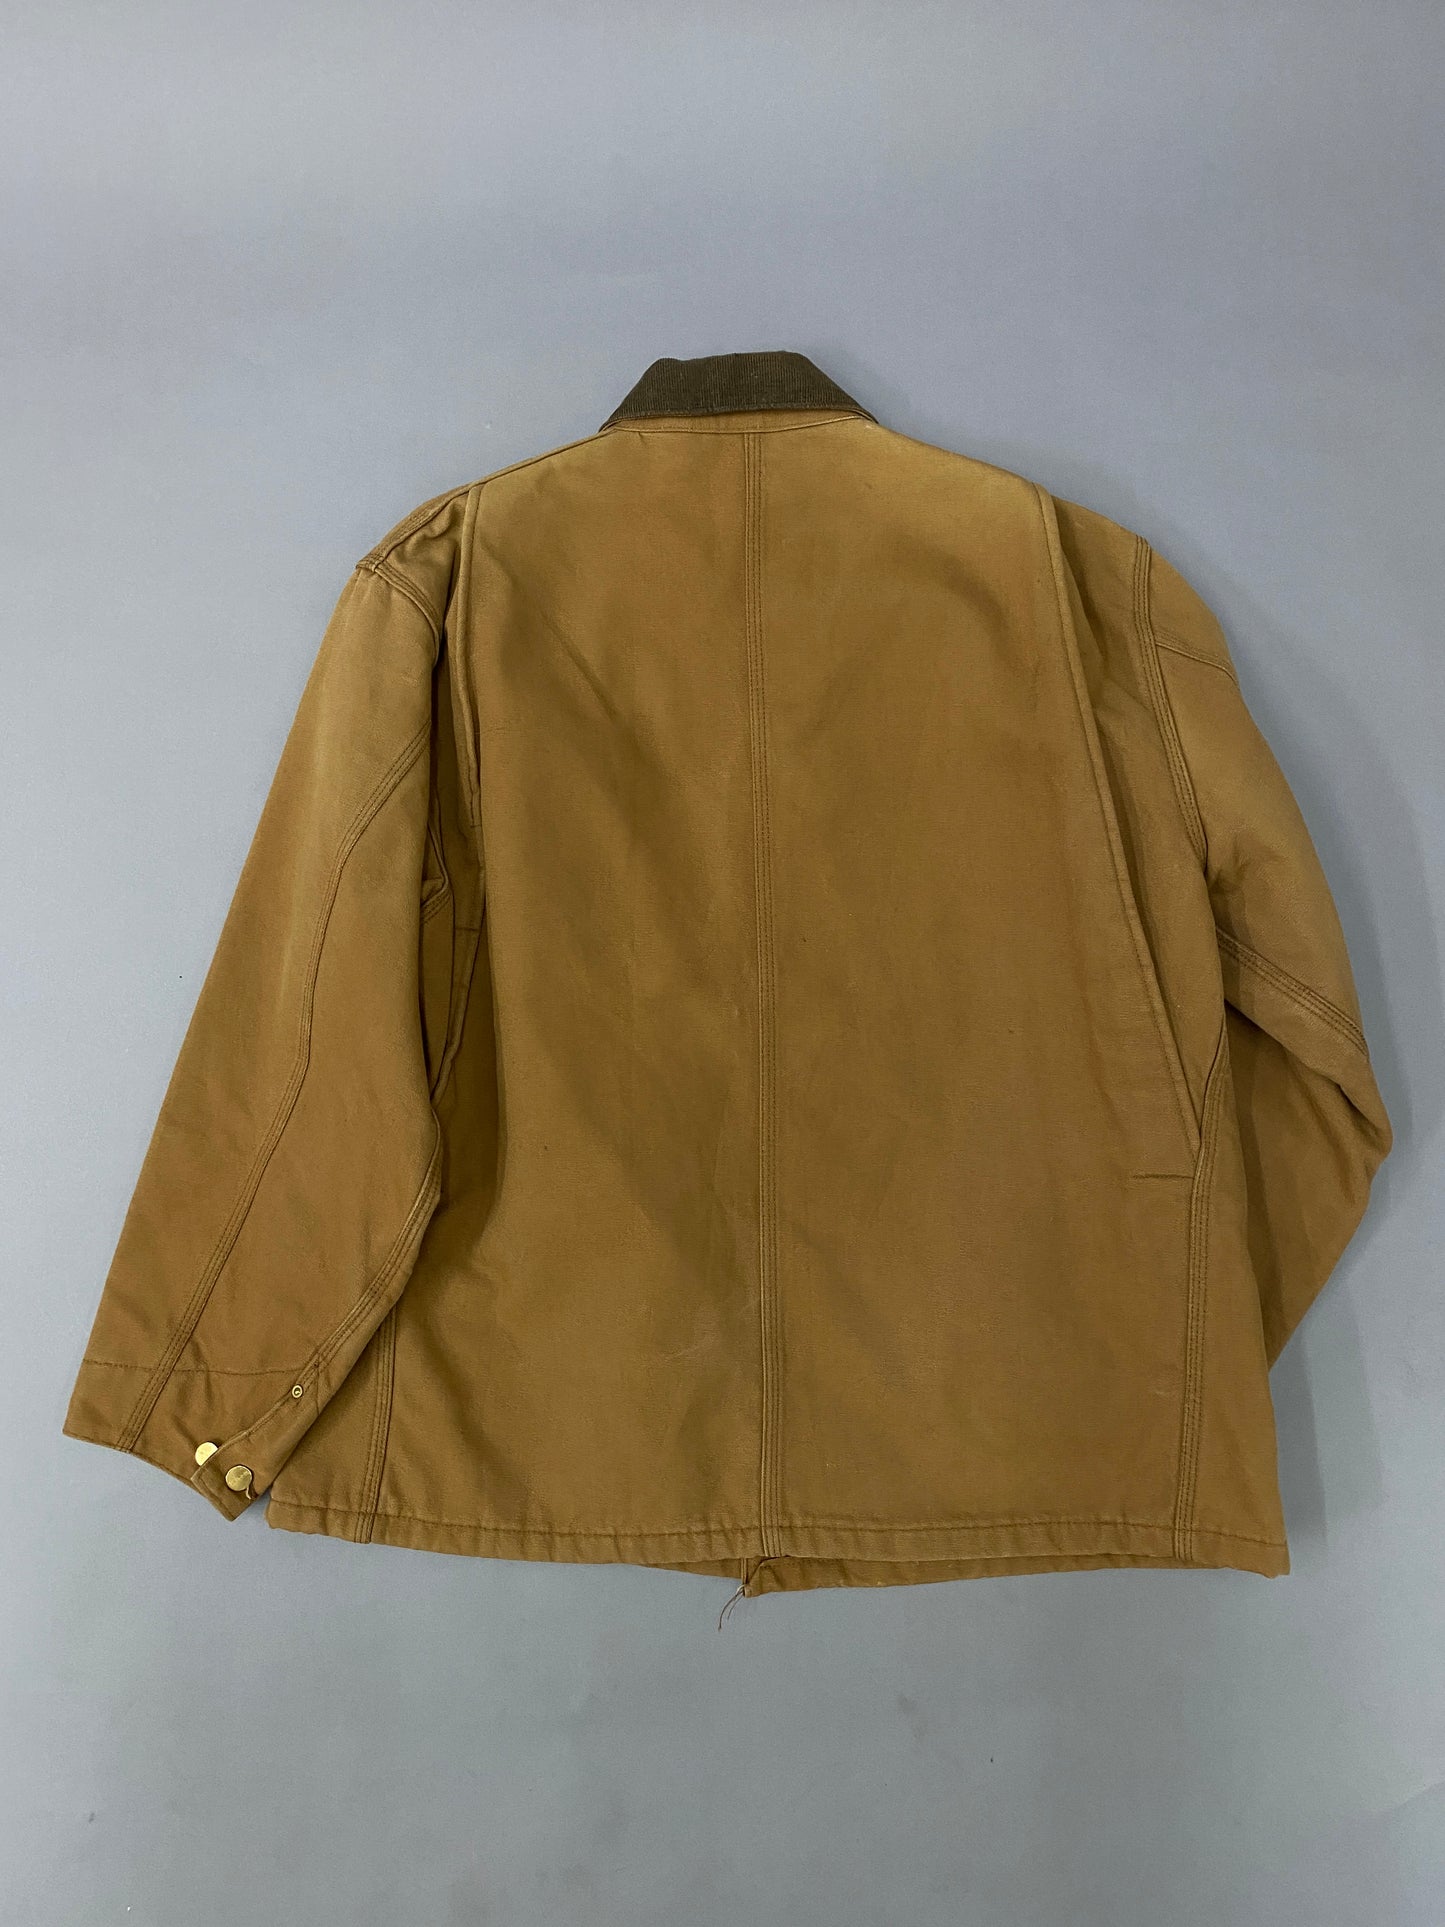 Carhartt Duck Blanket Vintage Jacket